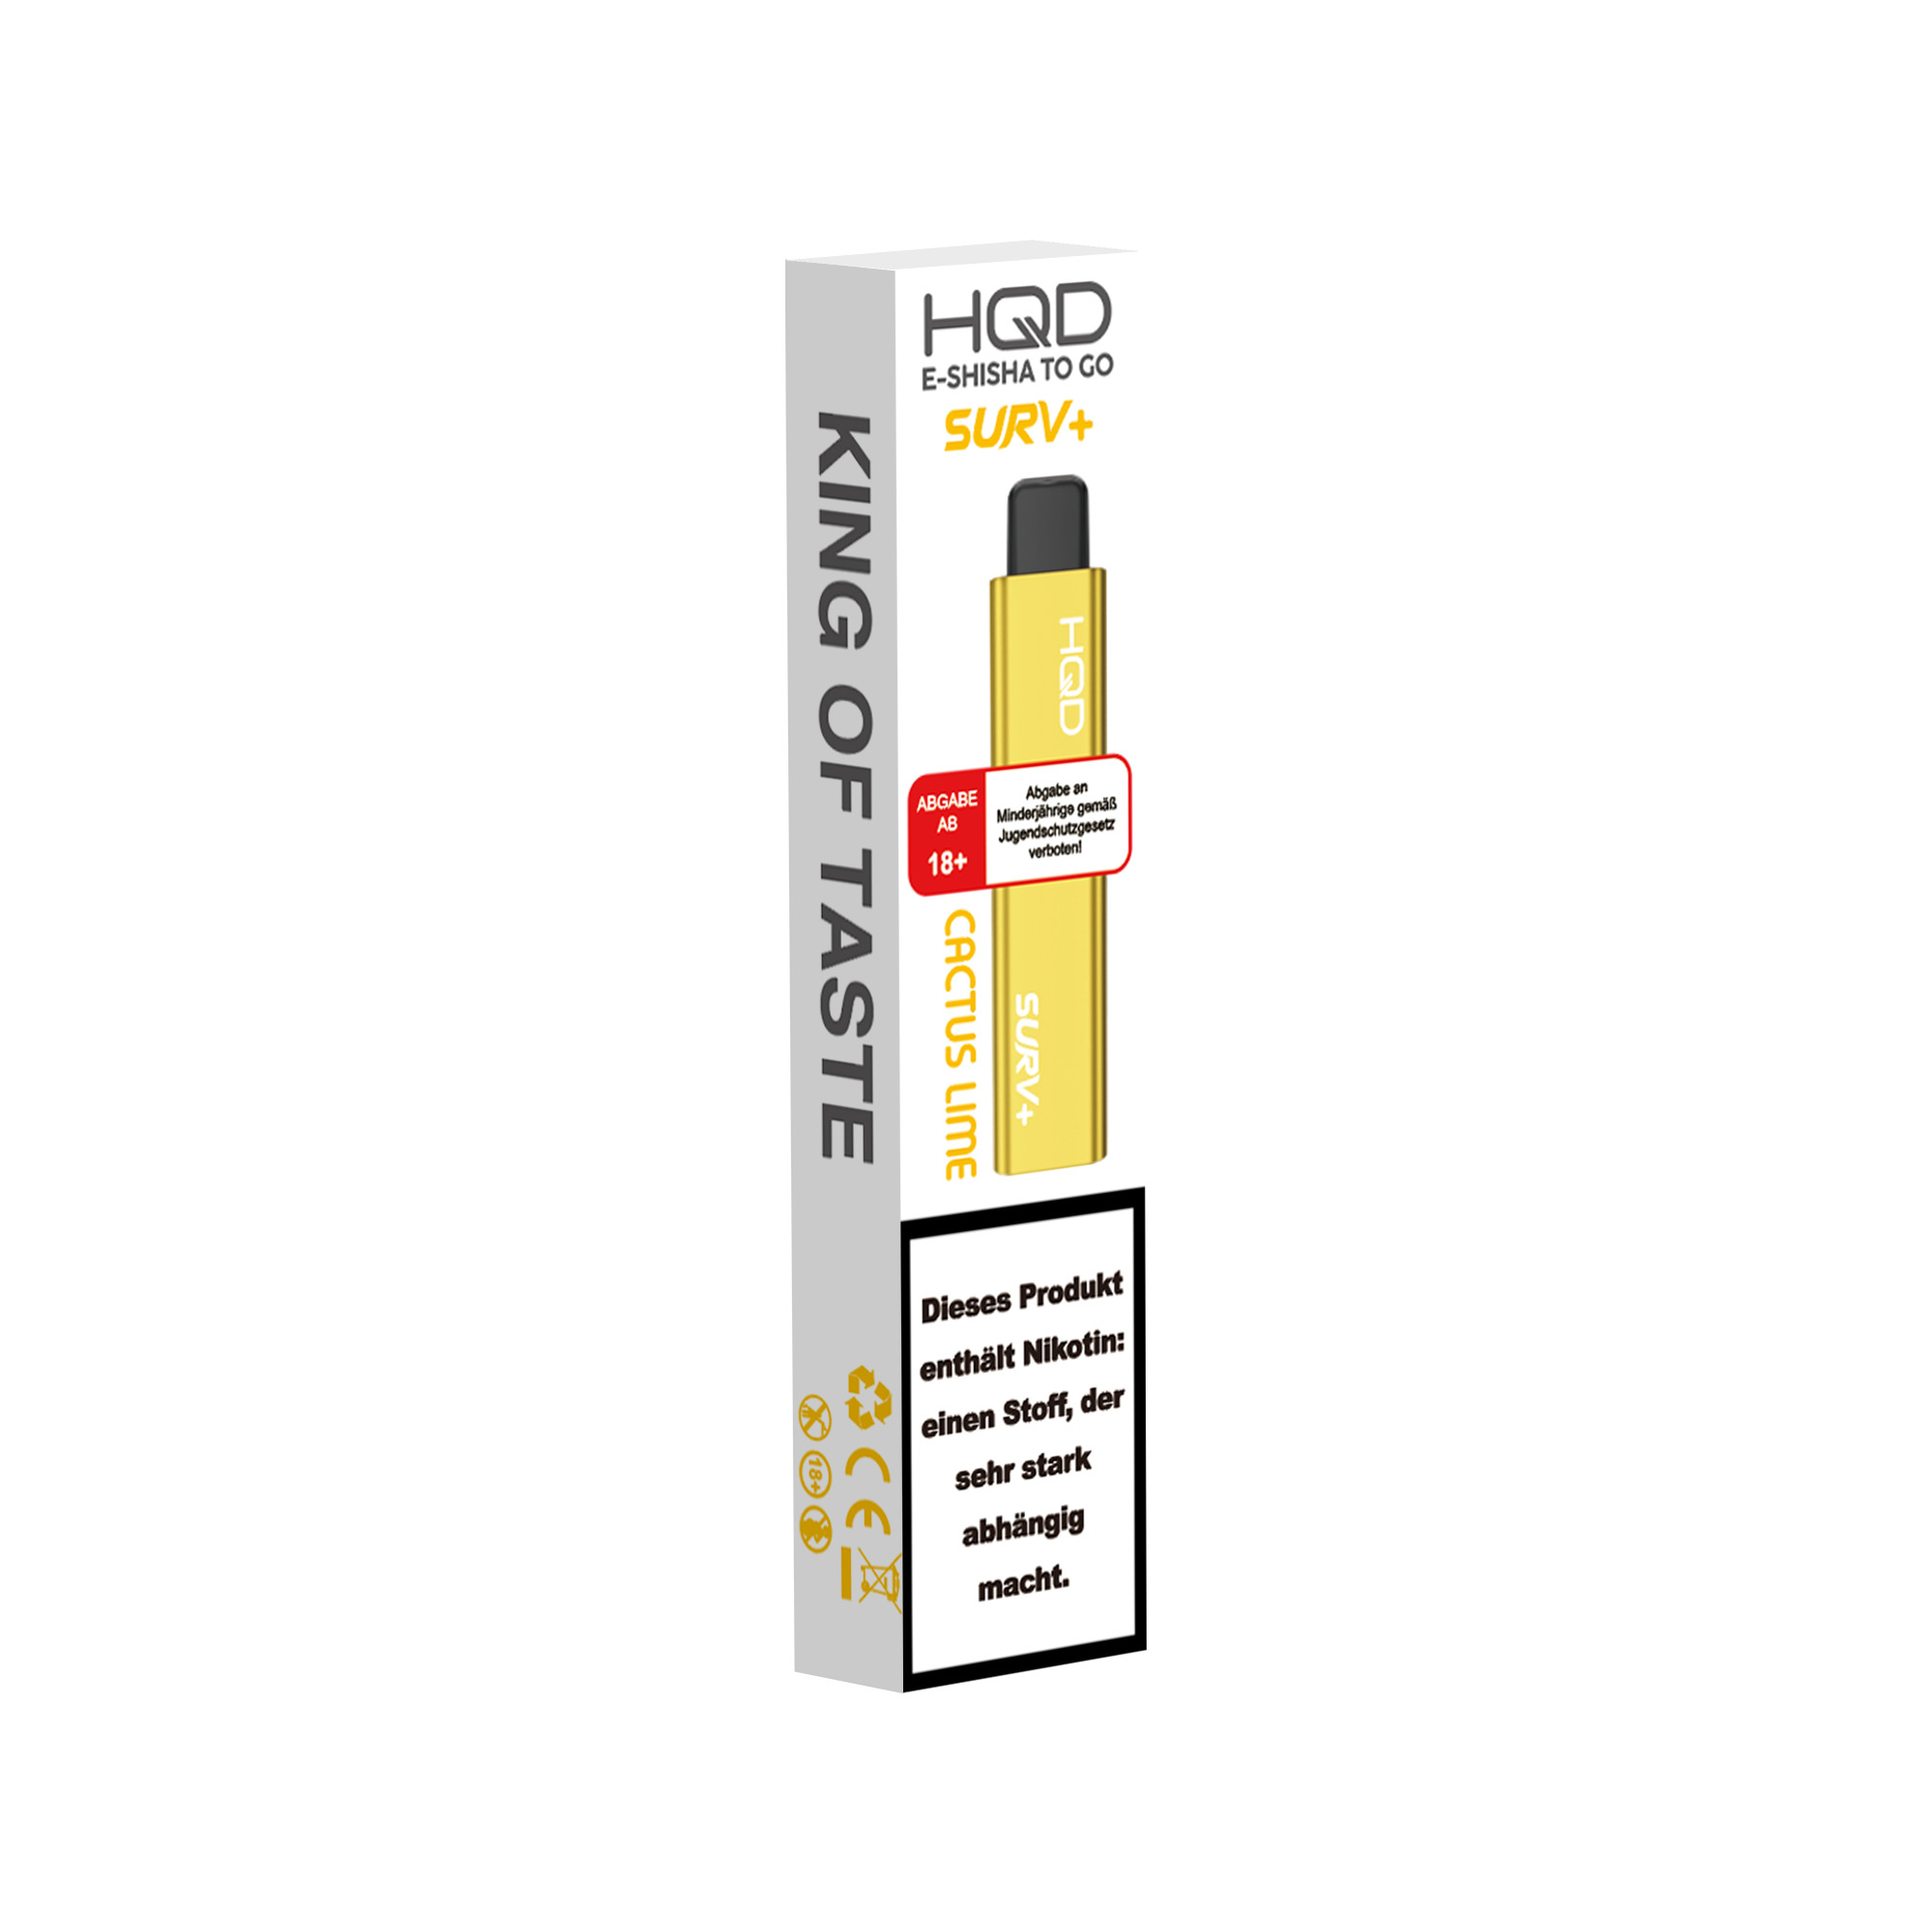 E-Zigarette HQD Surv+ CACTUS LIME 18mg Nikotin 600